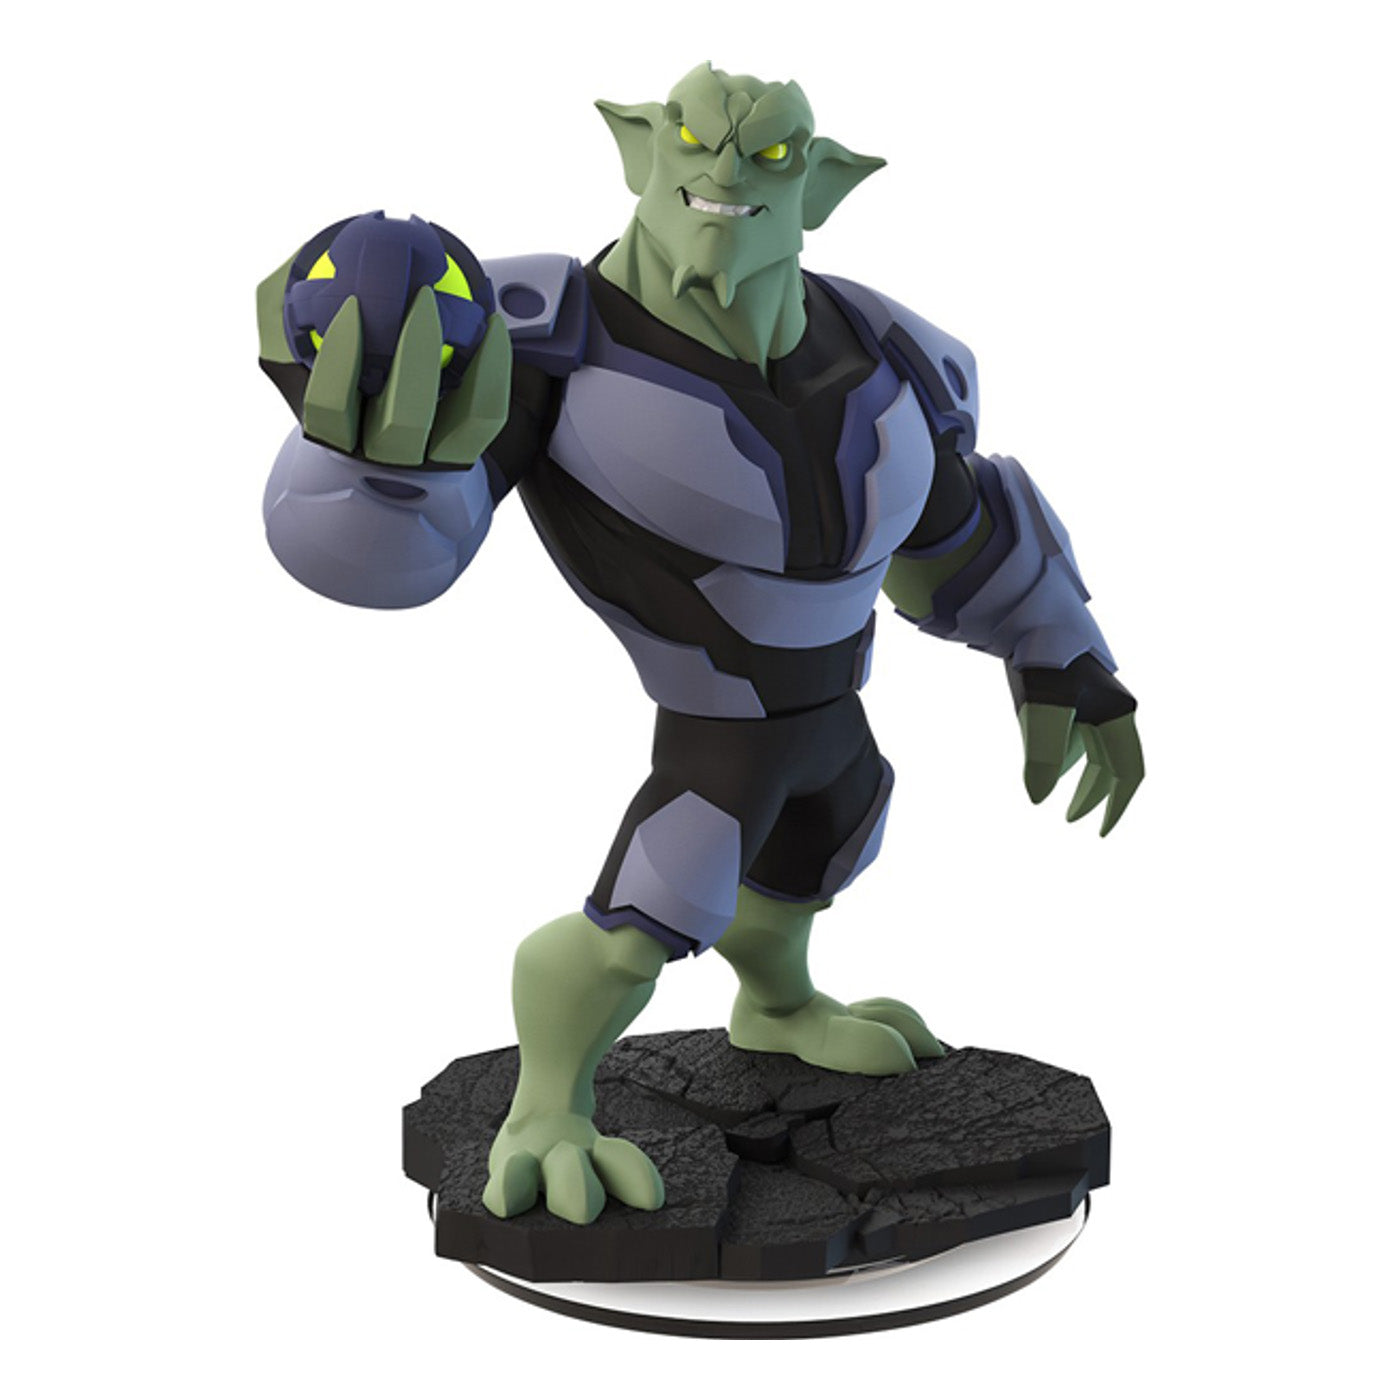 Disney Infinity 2.0 Character: Green Goblin